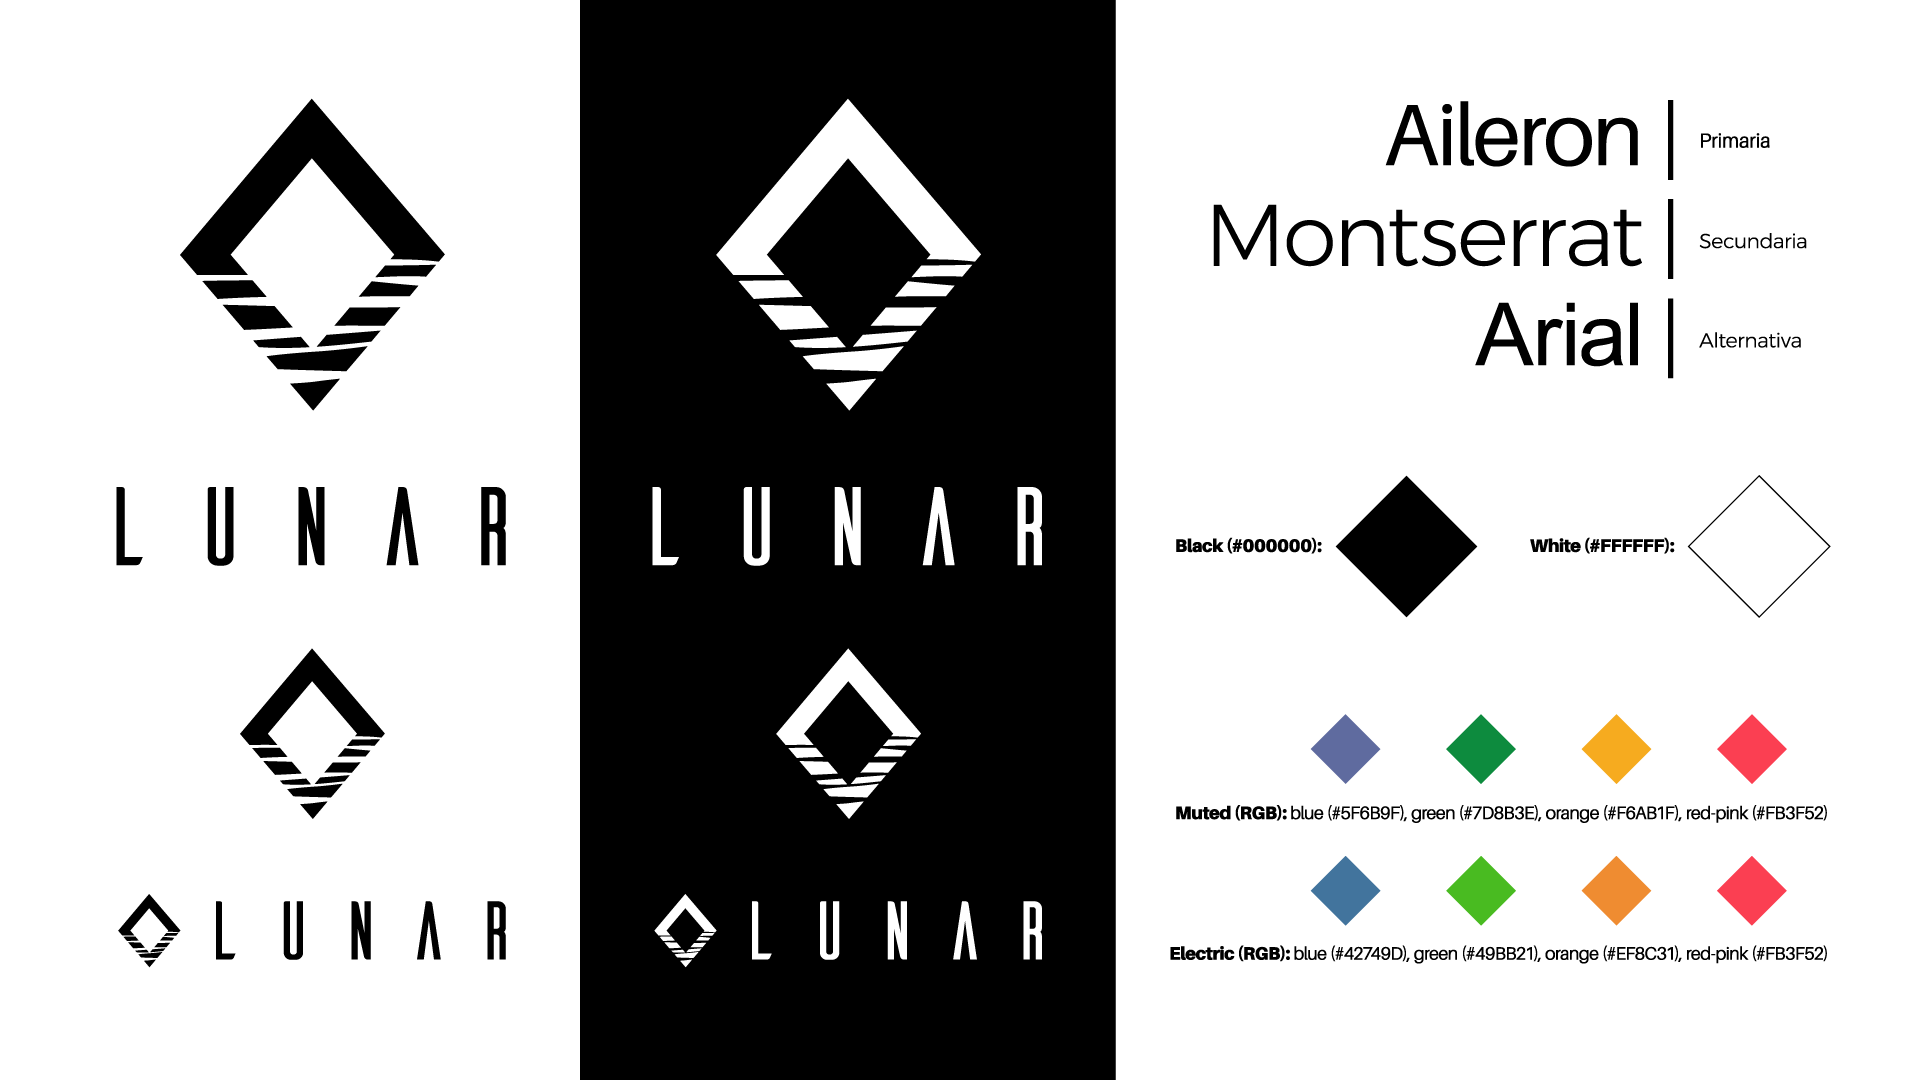 LunarPage identidad